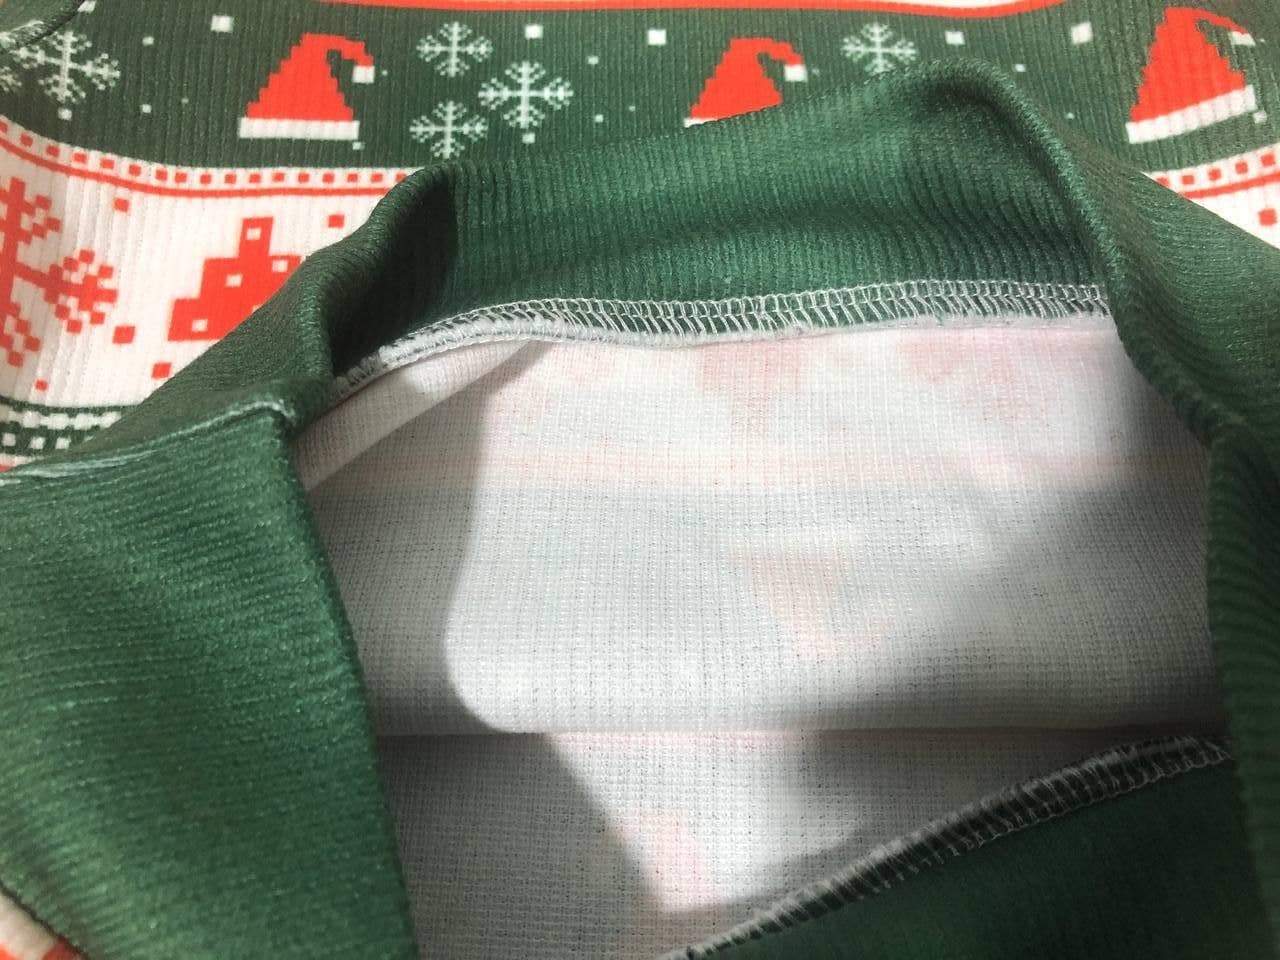 Armin Arlert Attack on Titan Anime Ugly Christmas Sweater New Design